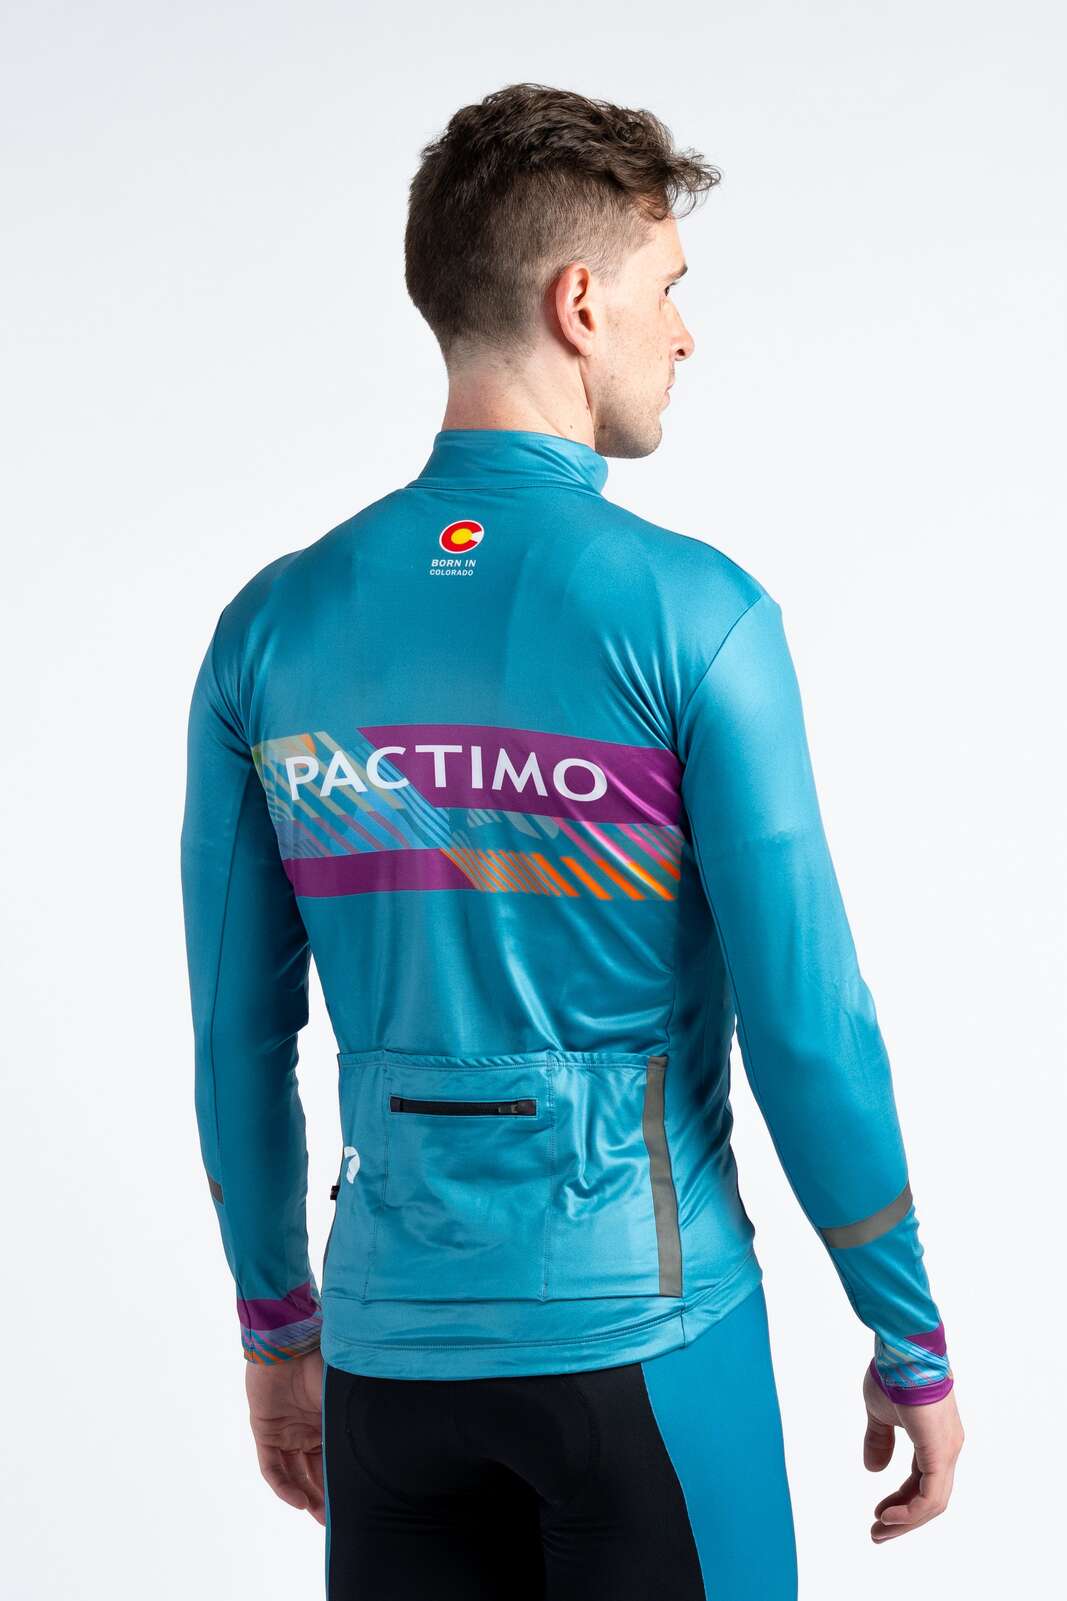 Men's Custom Cycling Jacket for Winter